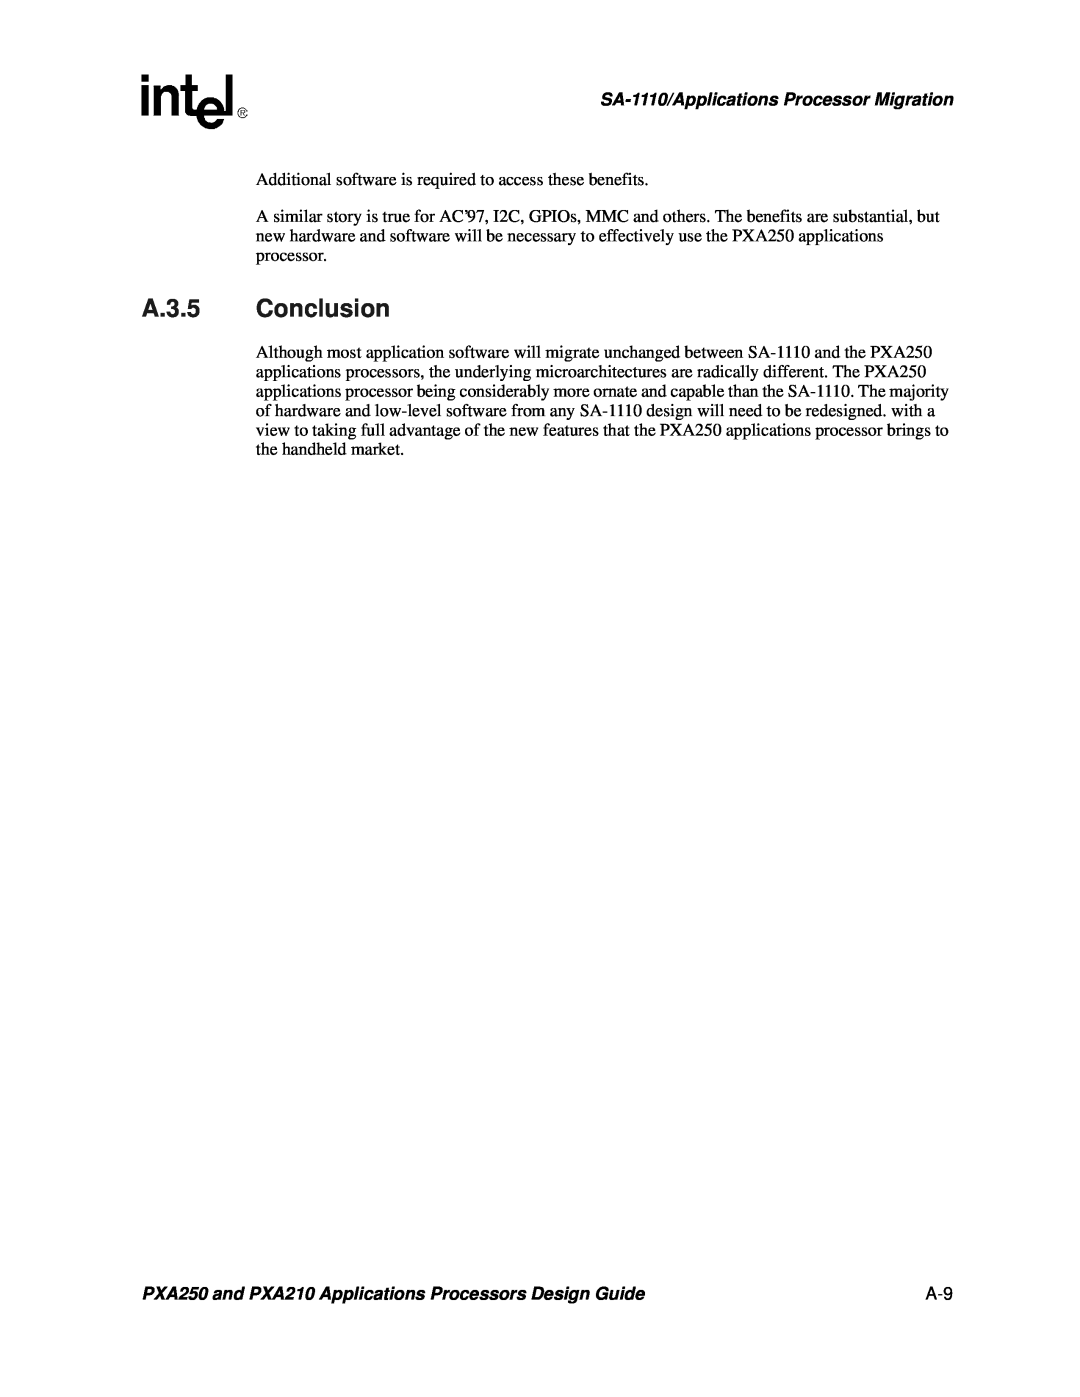 Intel PXA250 and PXA210 manual A.3.5 Conclusion, SA-1110/Applications Processor Migration 